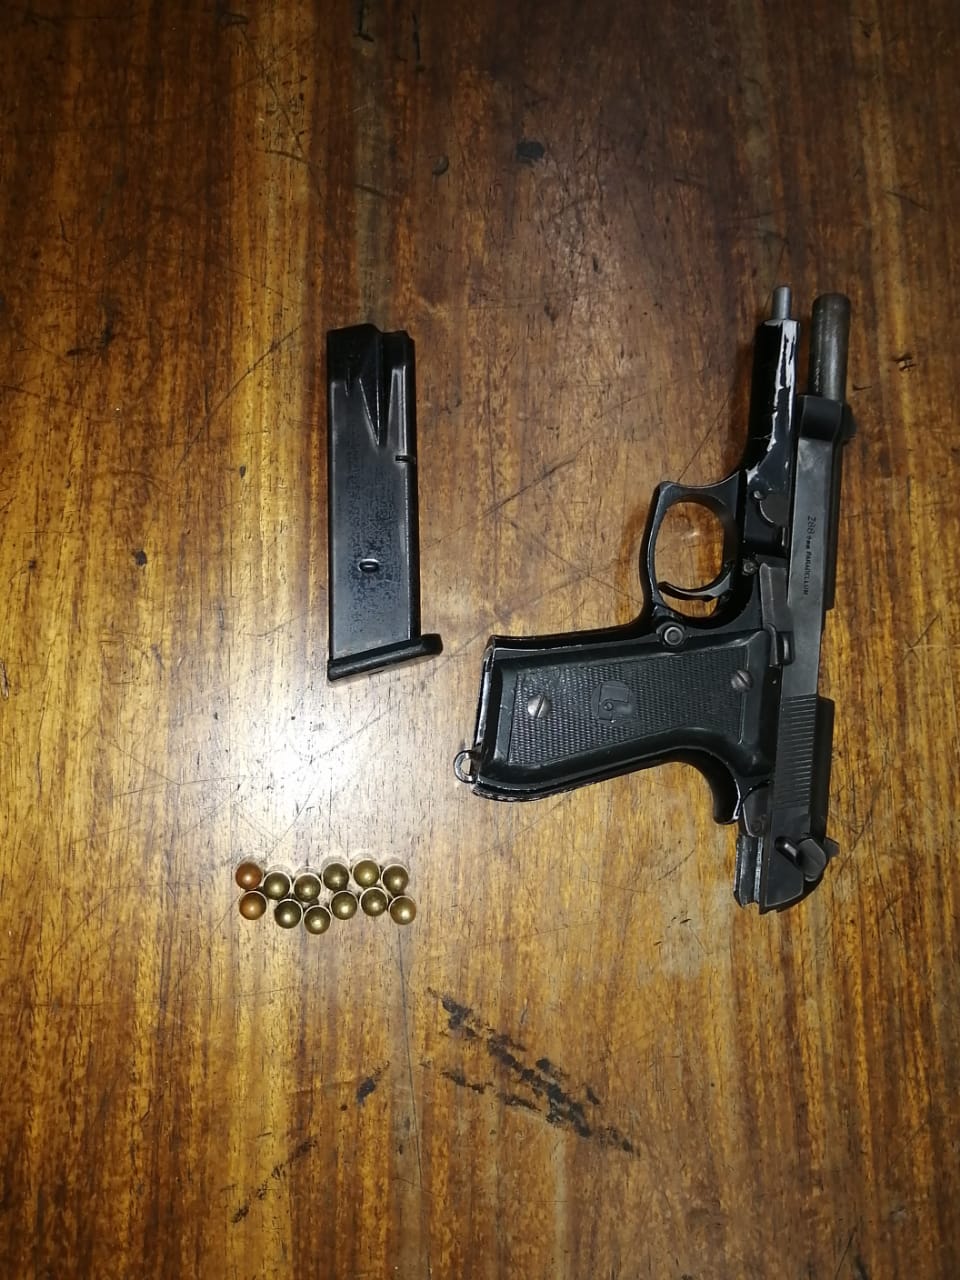 Gang member arrested for possession of prohibited firearm in Elsies River